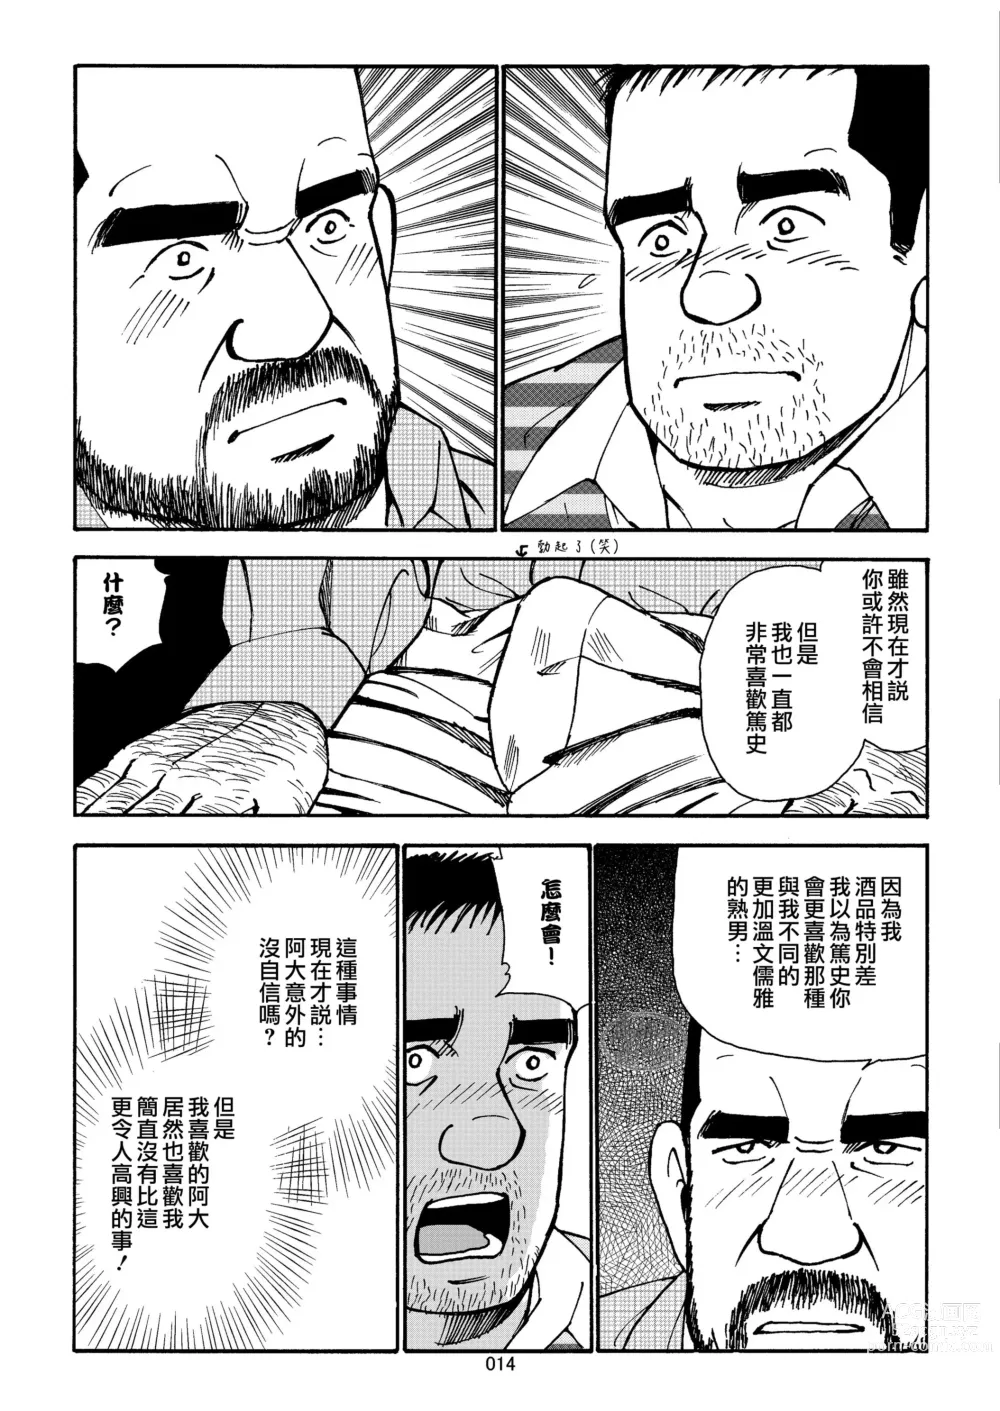 Page 14 of manga おいしい性活